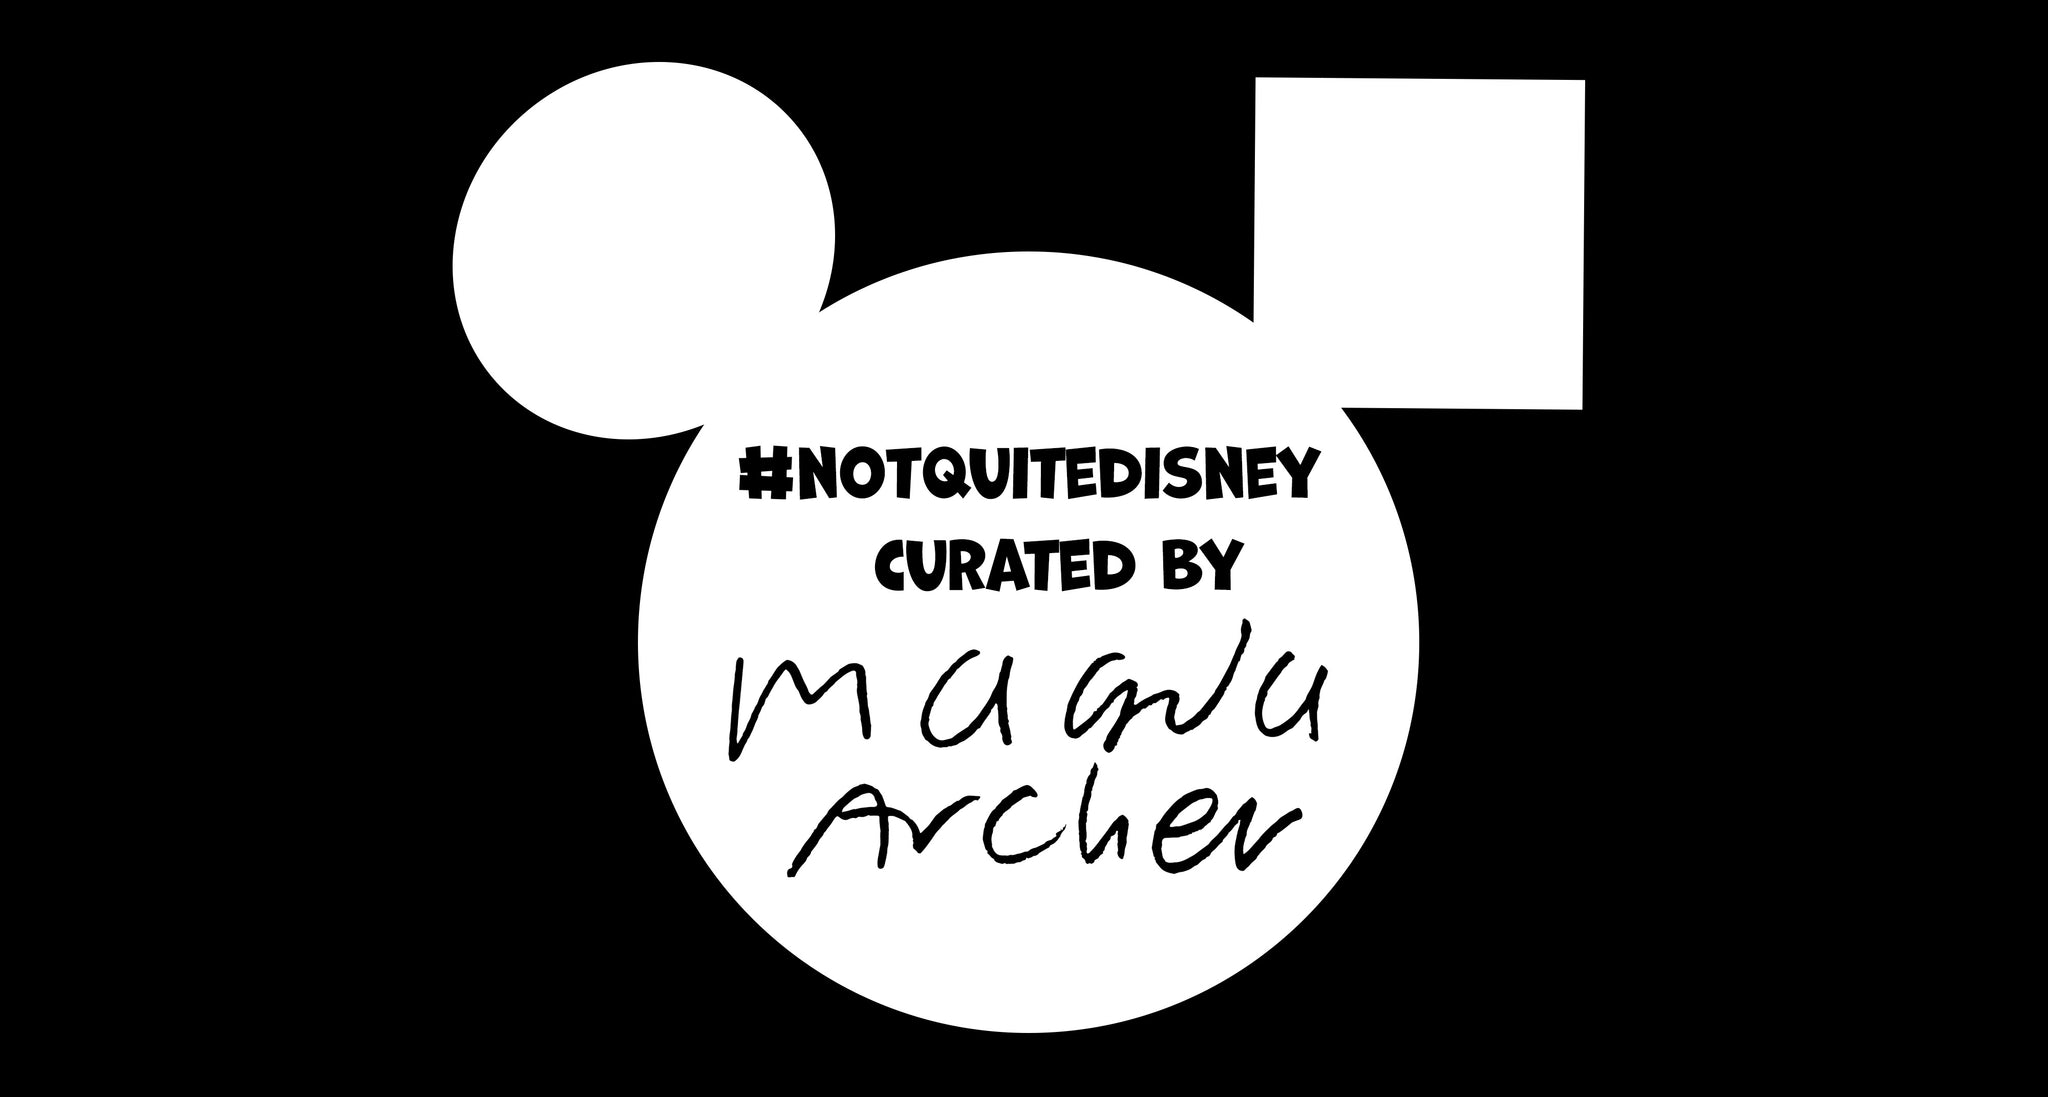 #notquitedisney Curated by Magda Archer